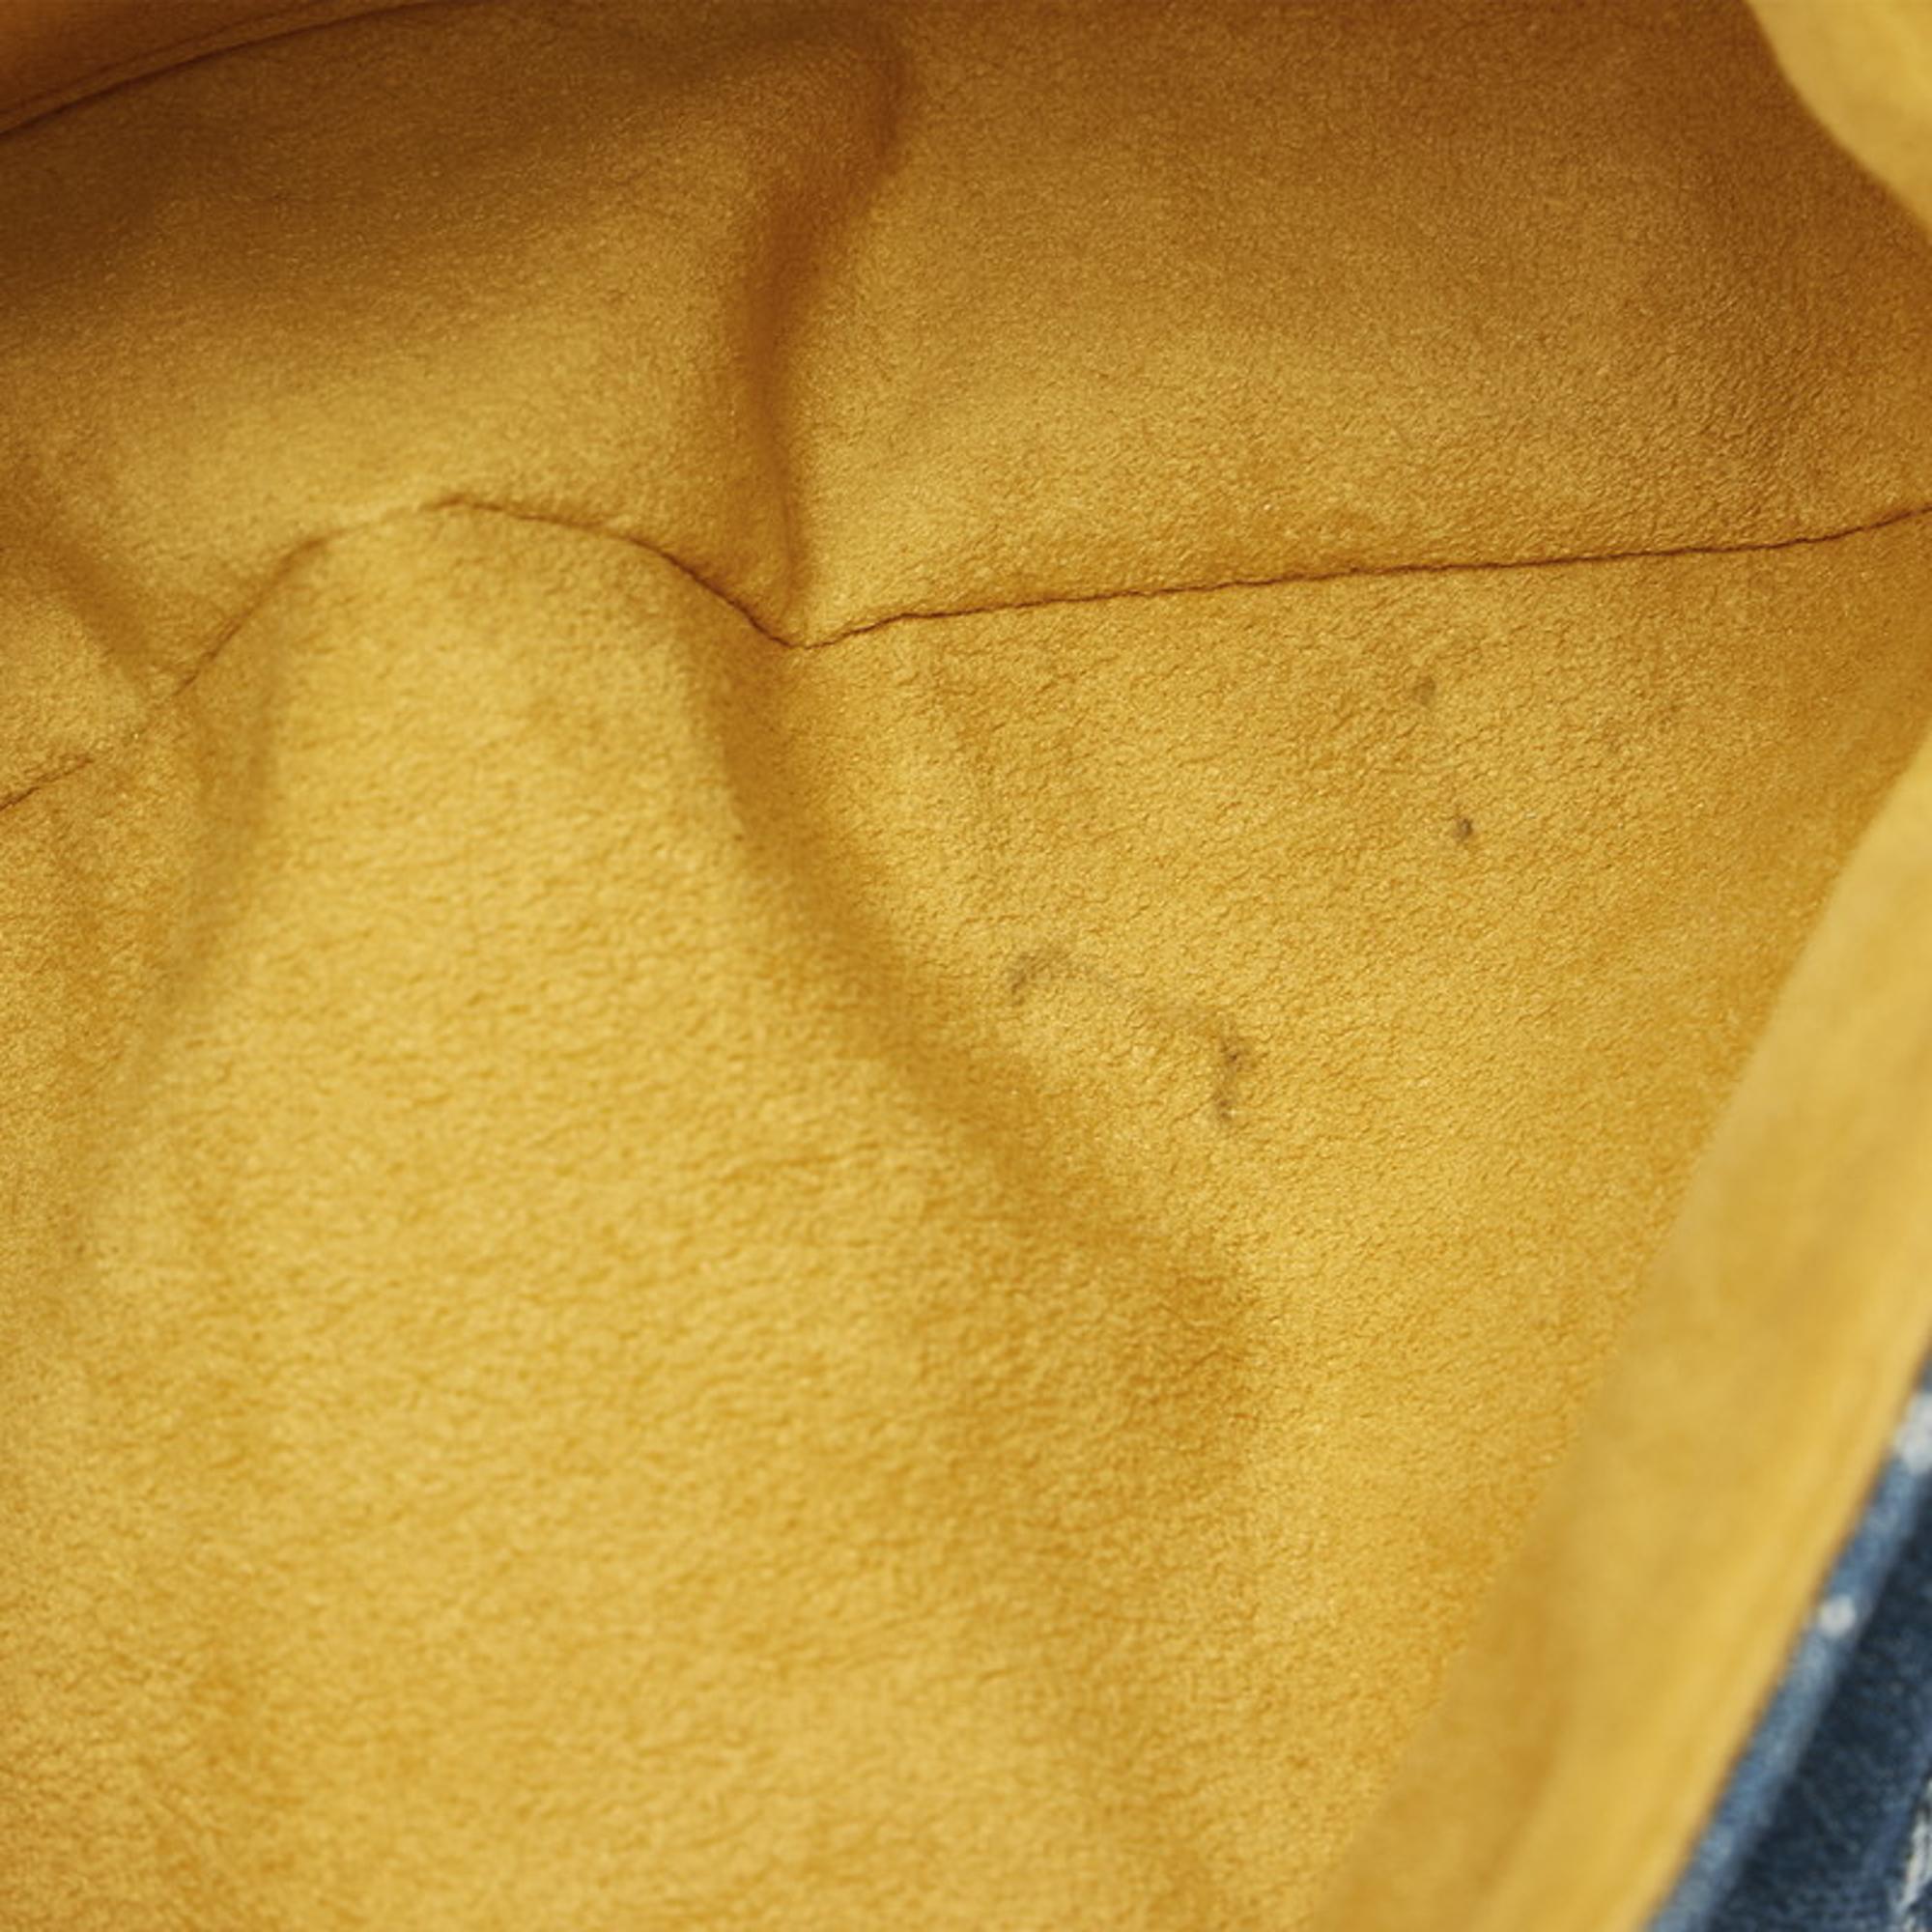 Louis Vuitton Blue Denim Monogram Denim Mini Pleaty Shoulder Bag